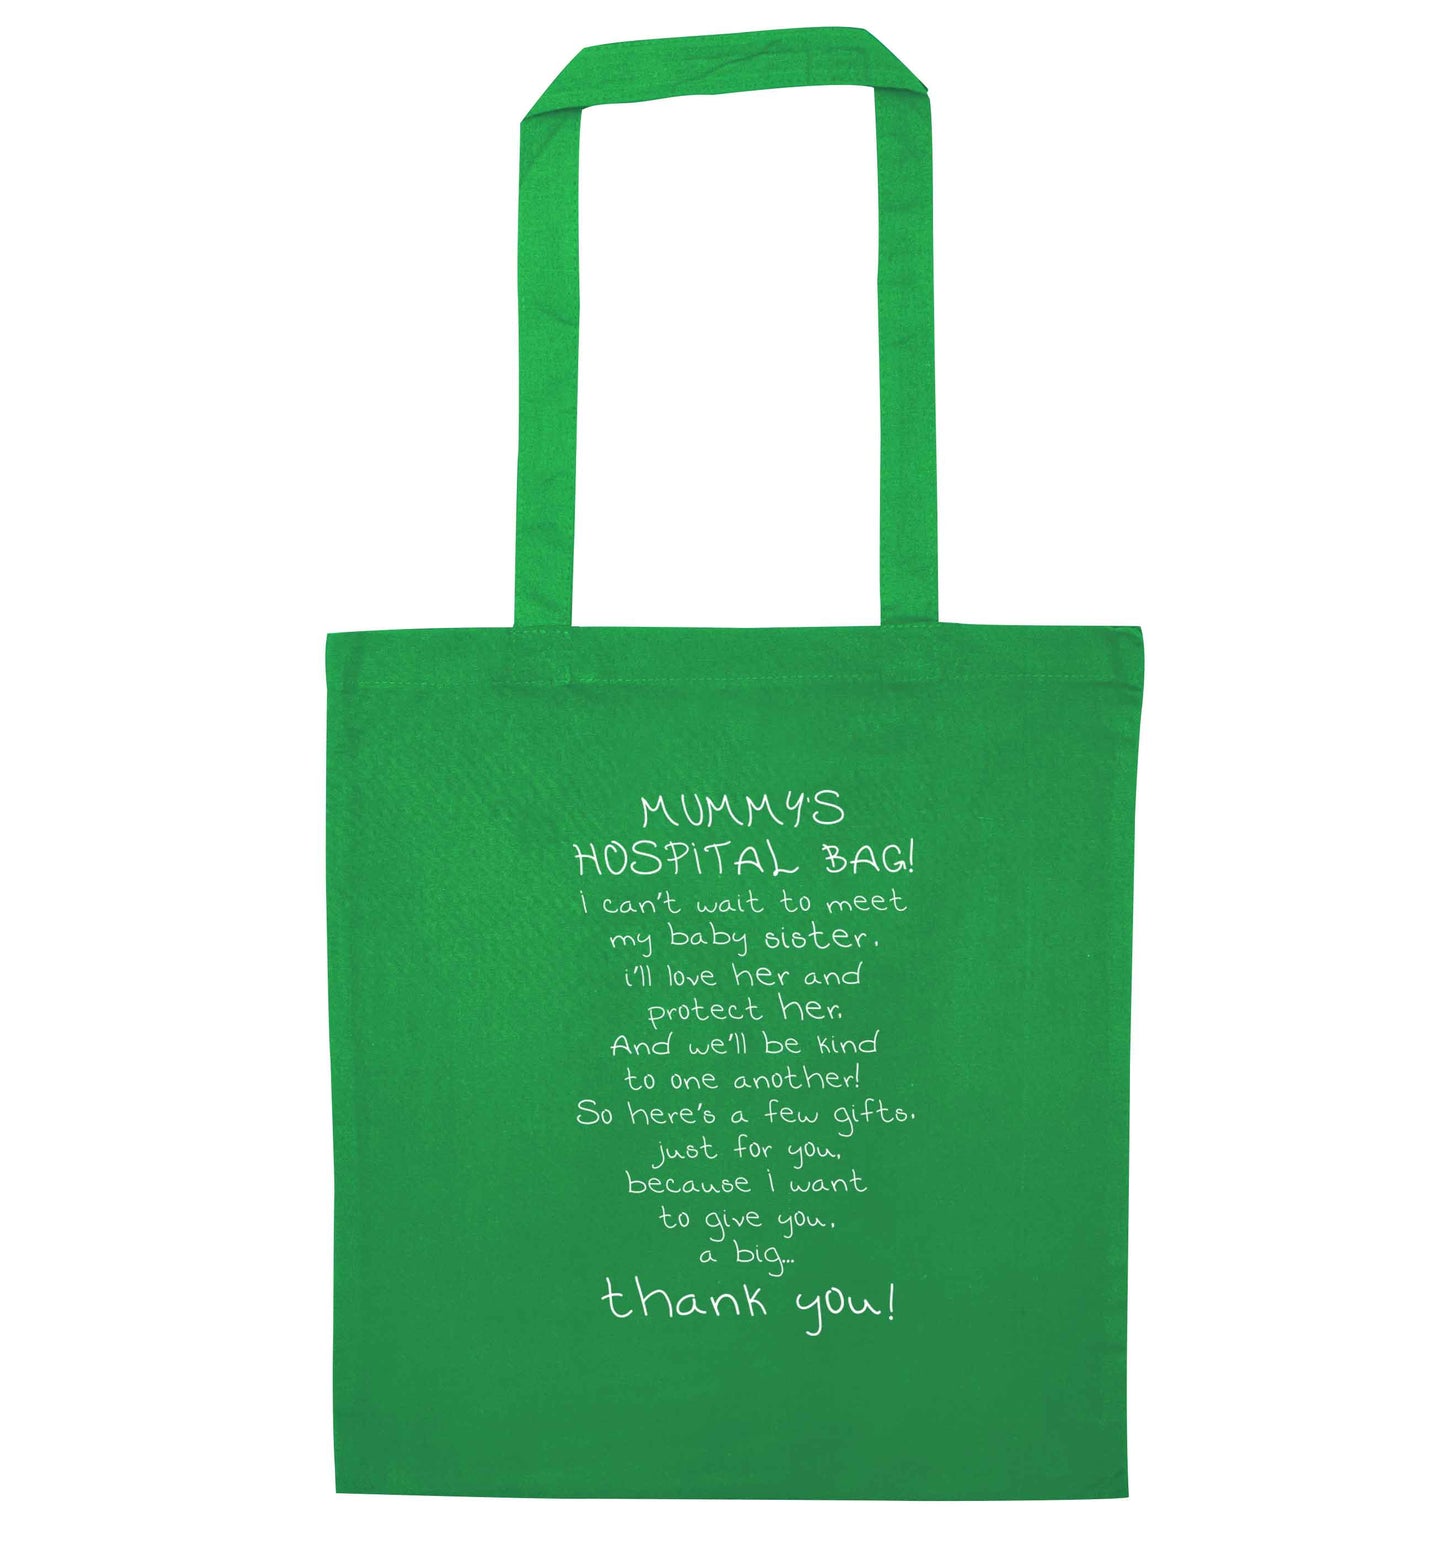 Mummy's hospital bag poem baby sister green tote bag